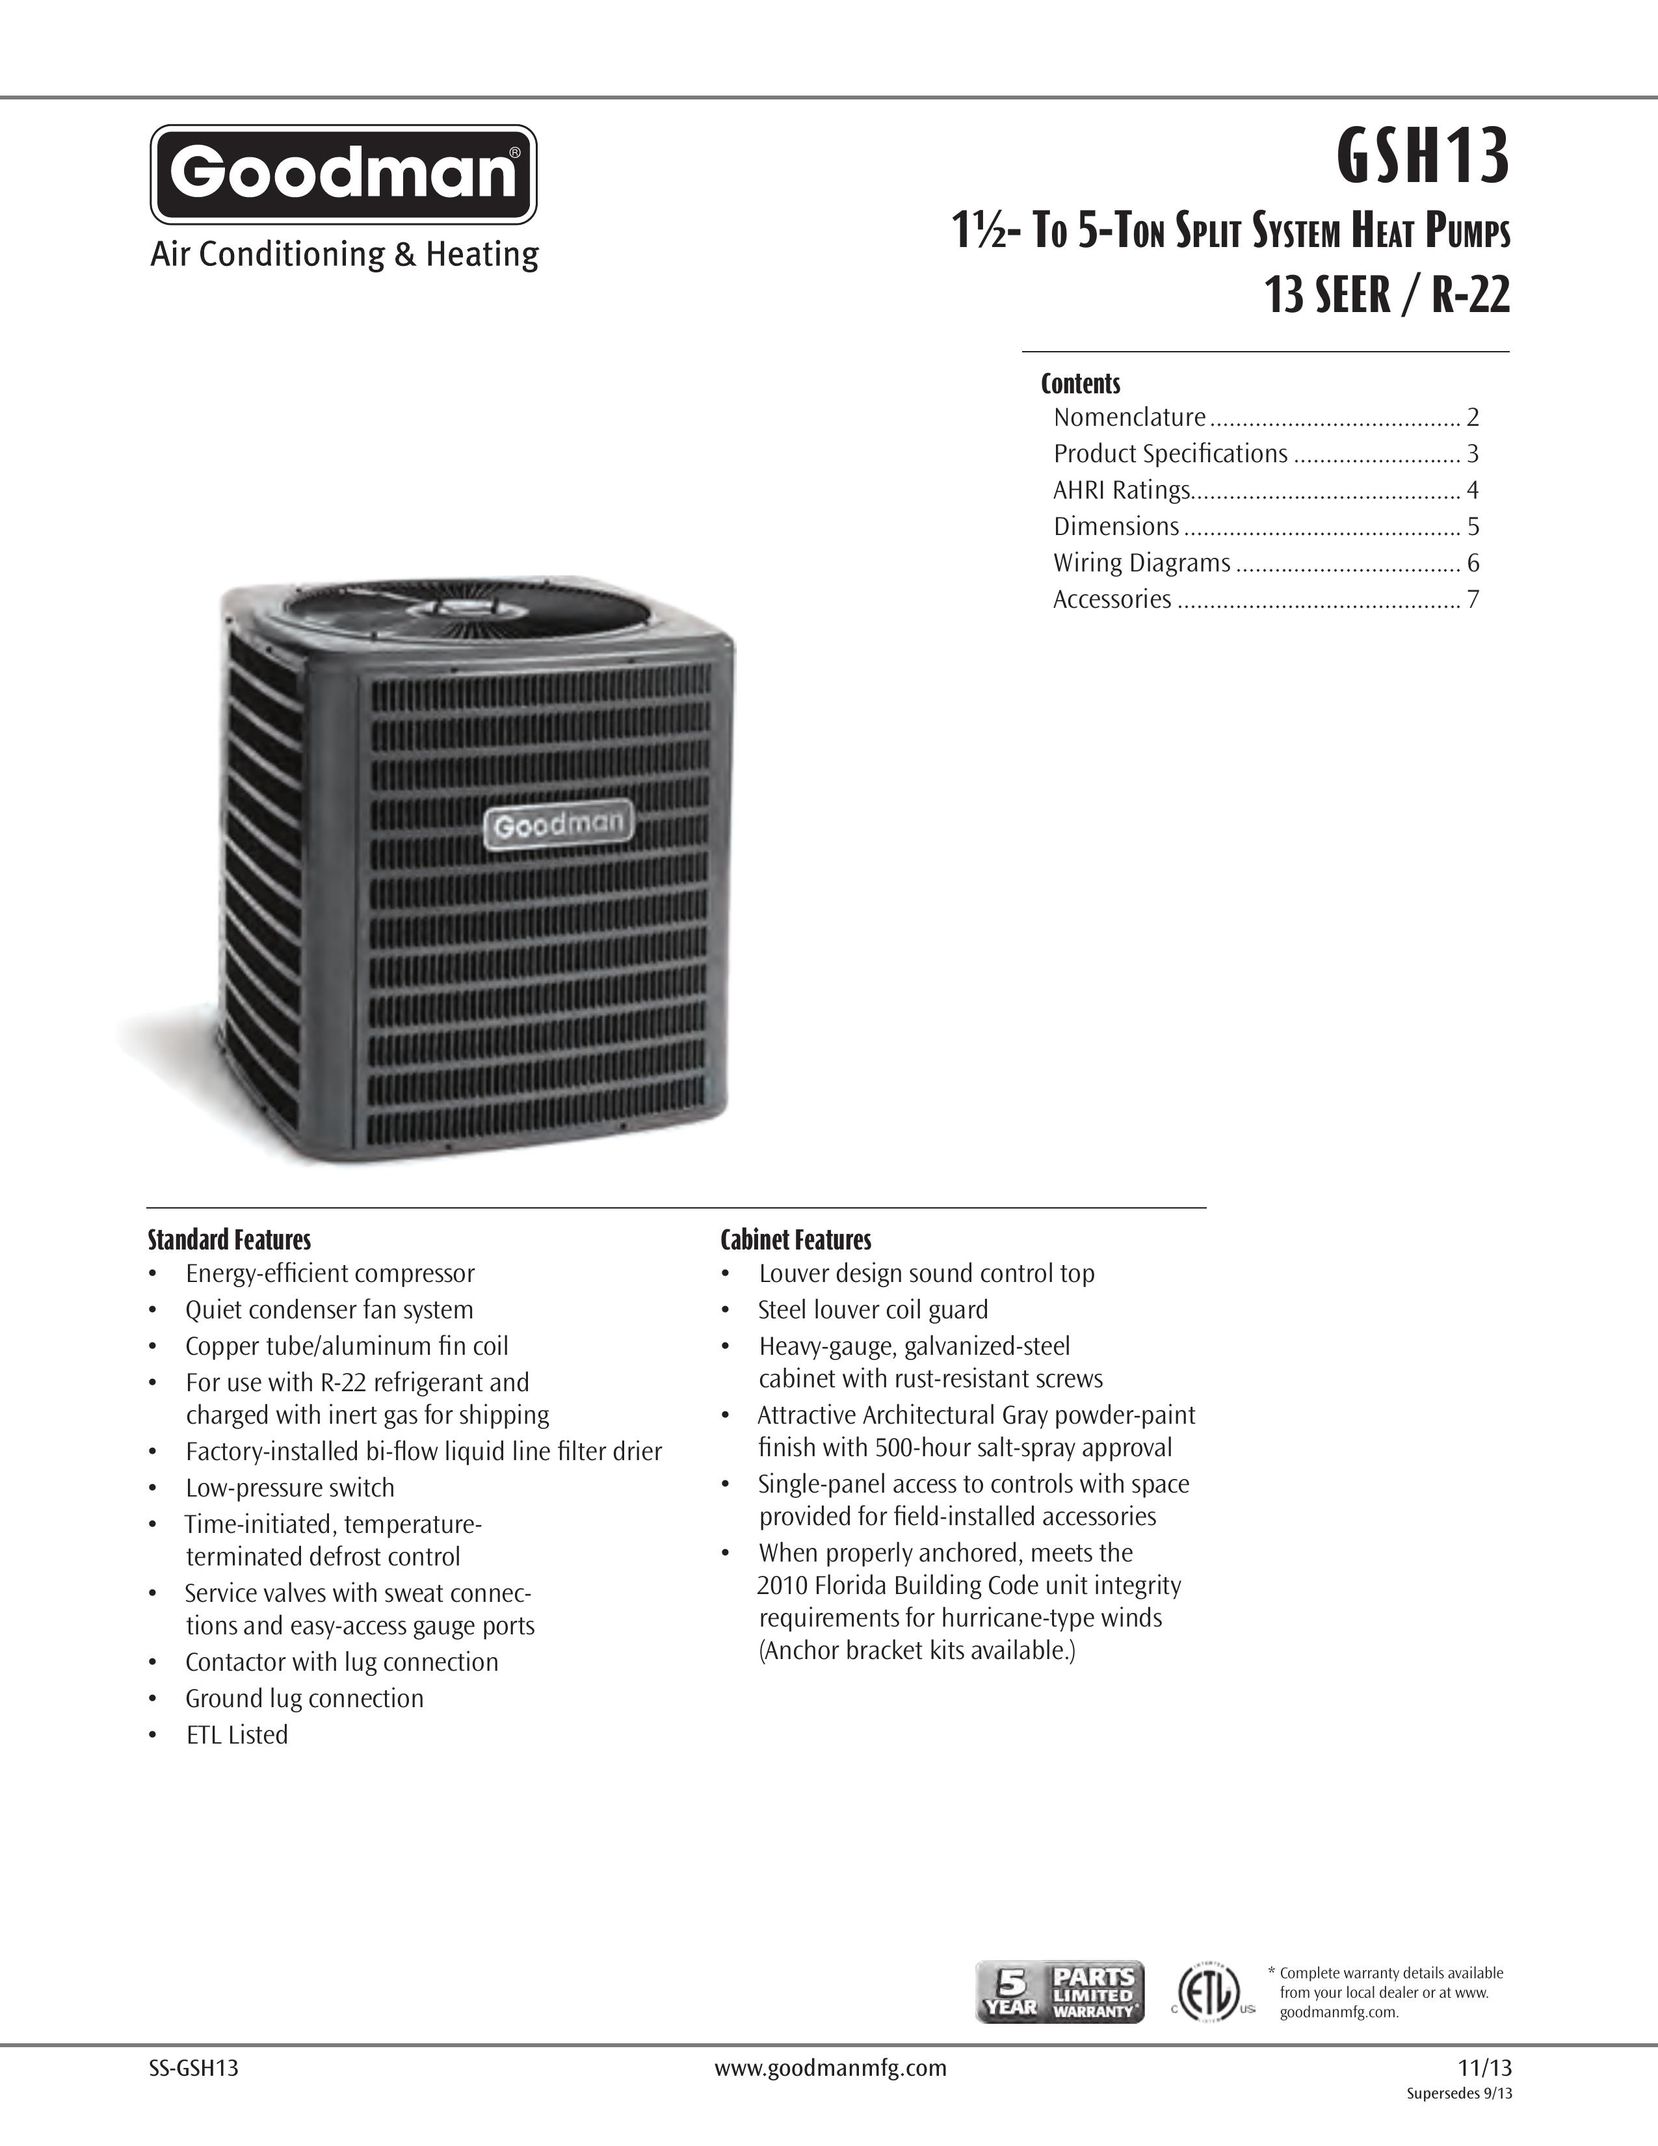 Goodman Mfg GSH13 Heating System User Manual